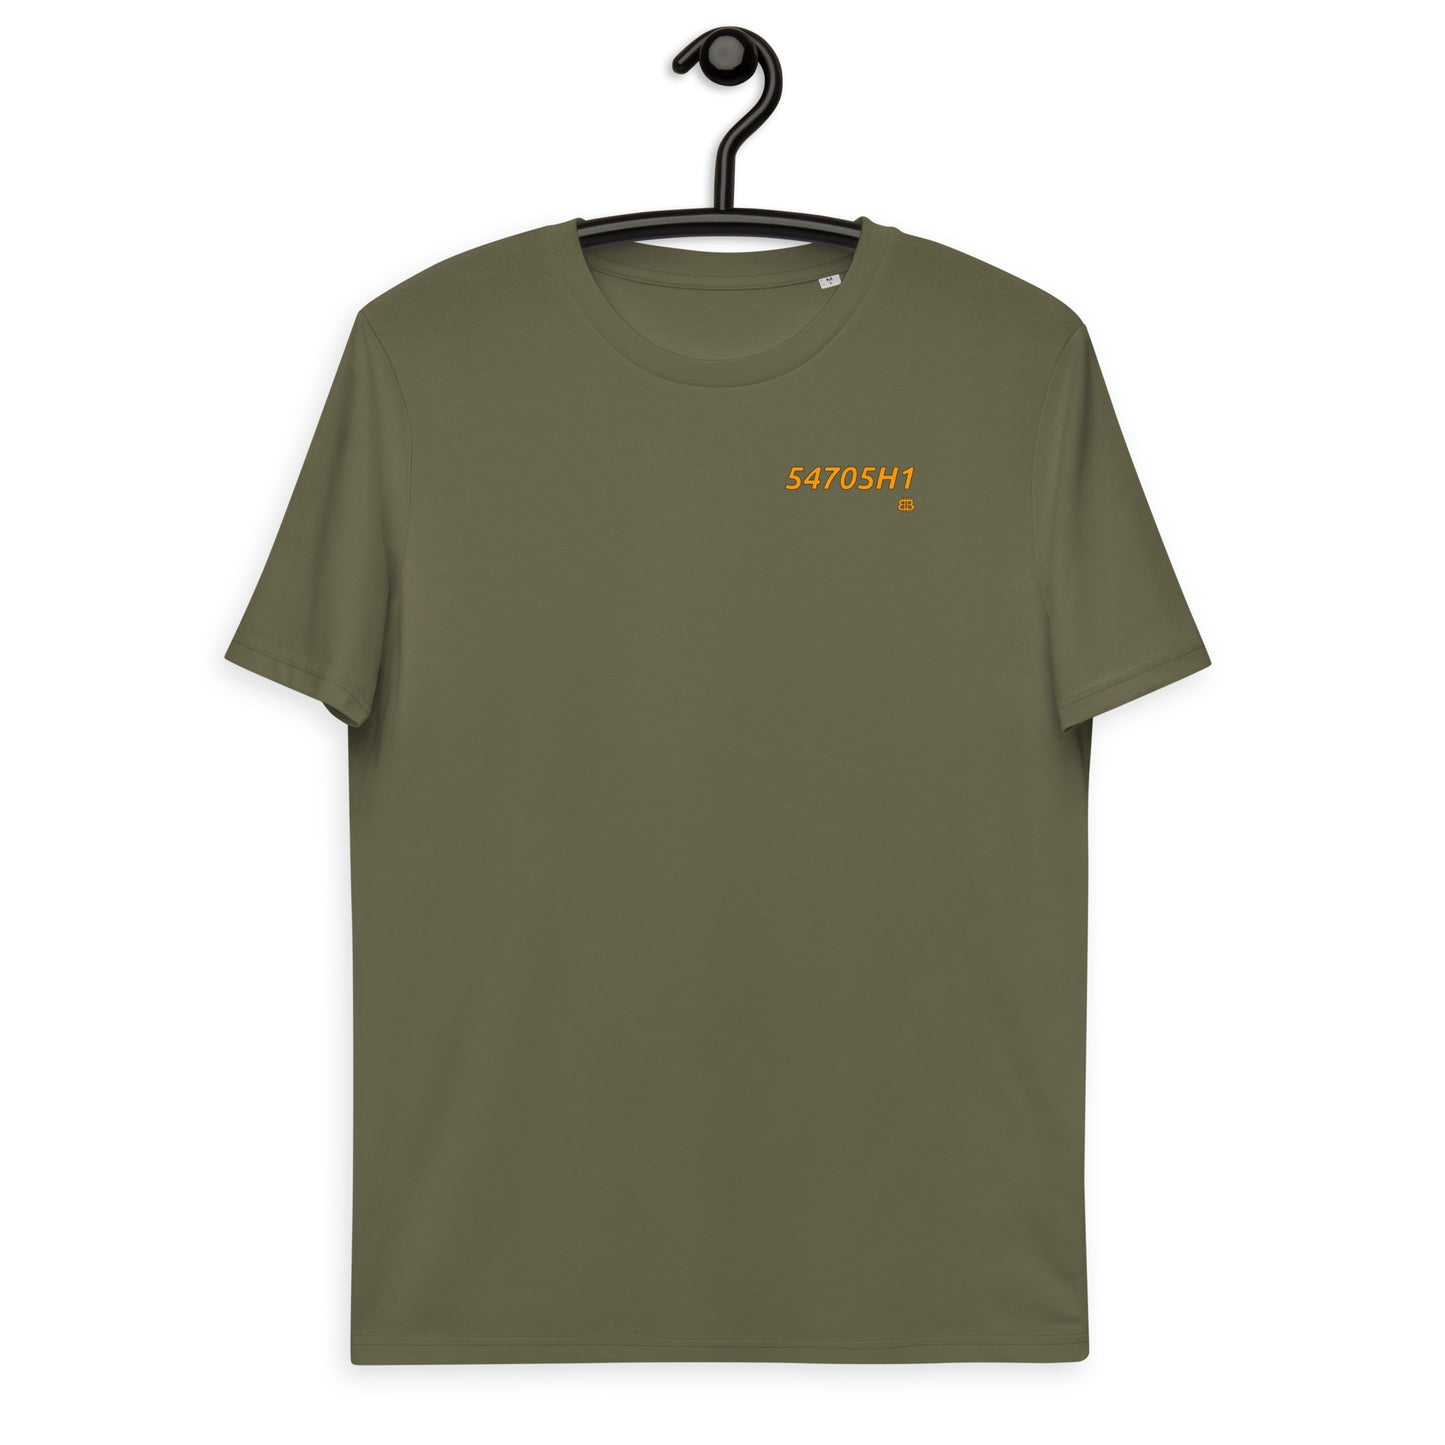 Unisex organic cotton t-shirt "54705H1_sm"